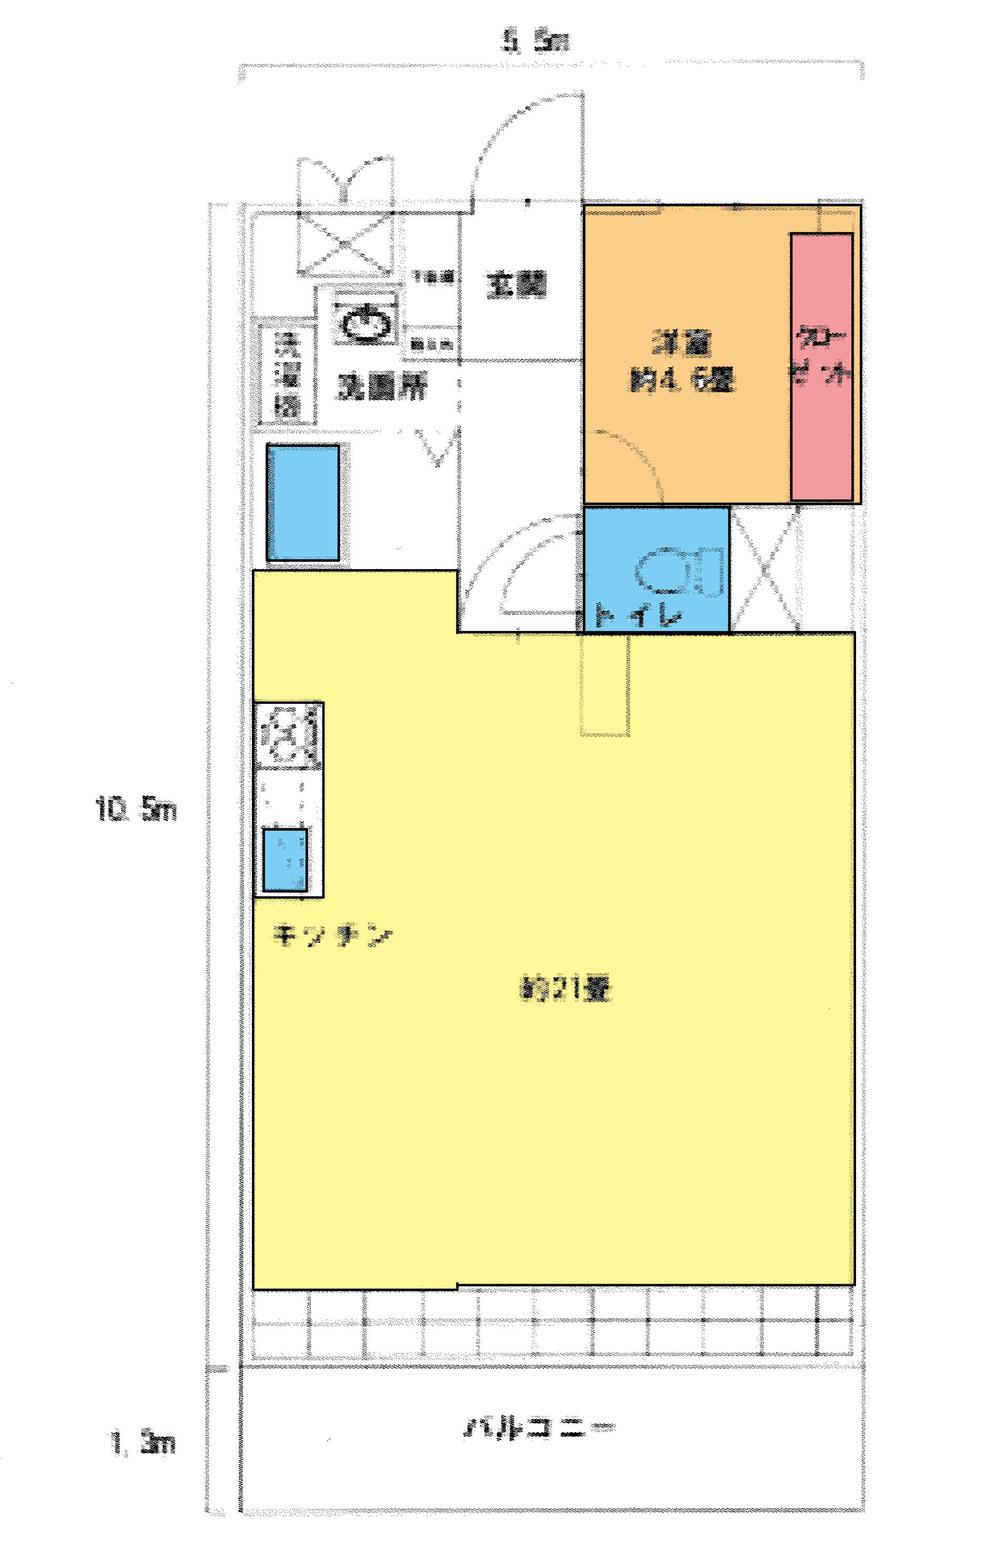 Floor plan. 1LDK, Price 8 million yen, Occupied area 57.75 sq m floor plan